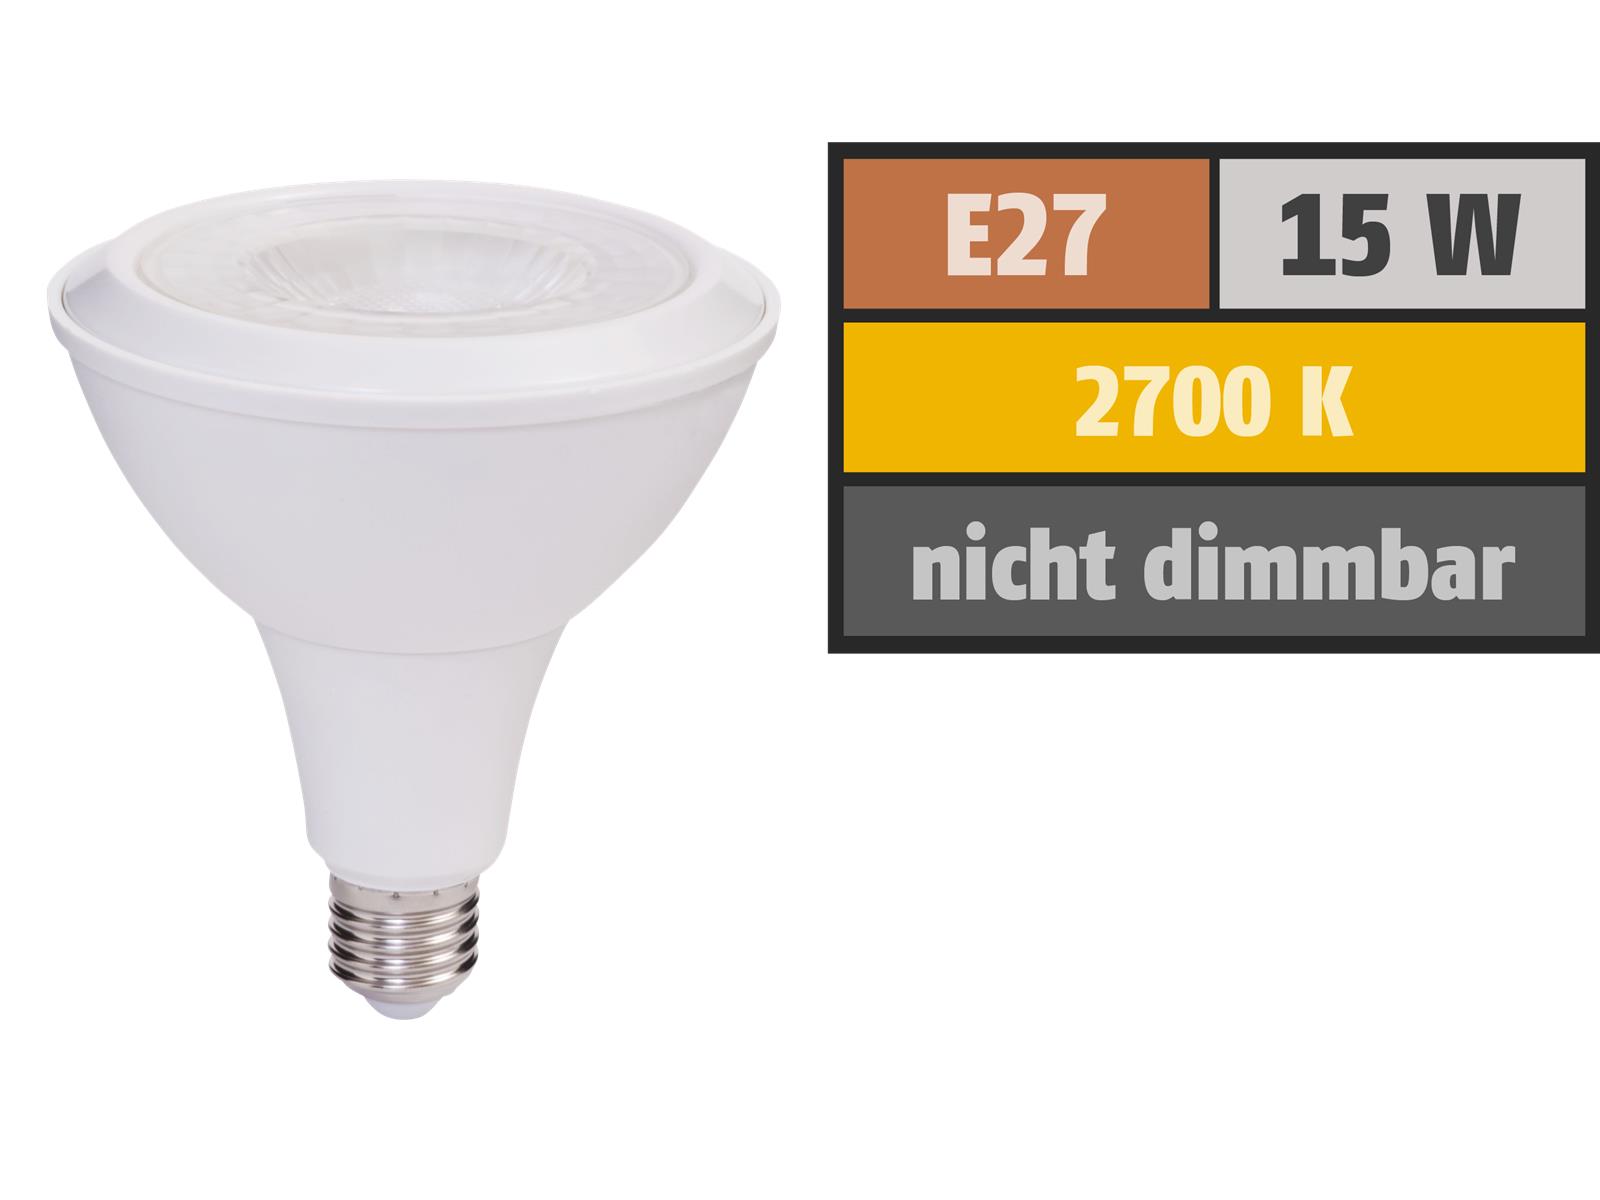 LED-Strahler PAR38, E27, 15W, 1.000 lm, IP54, warmweiß